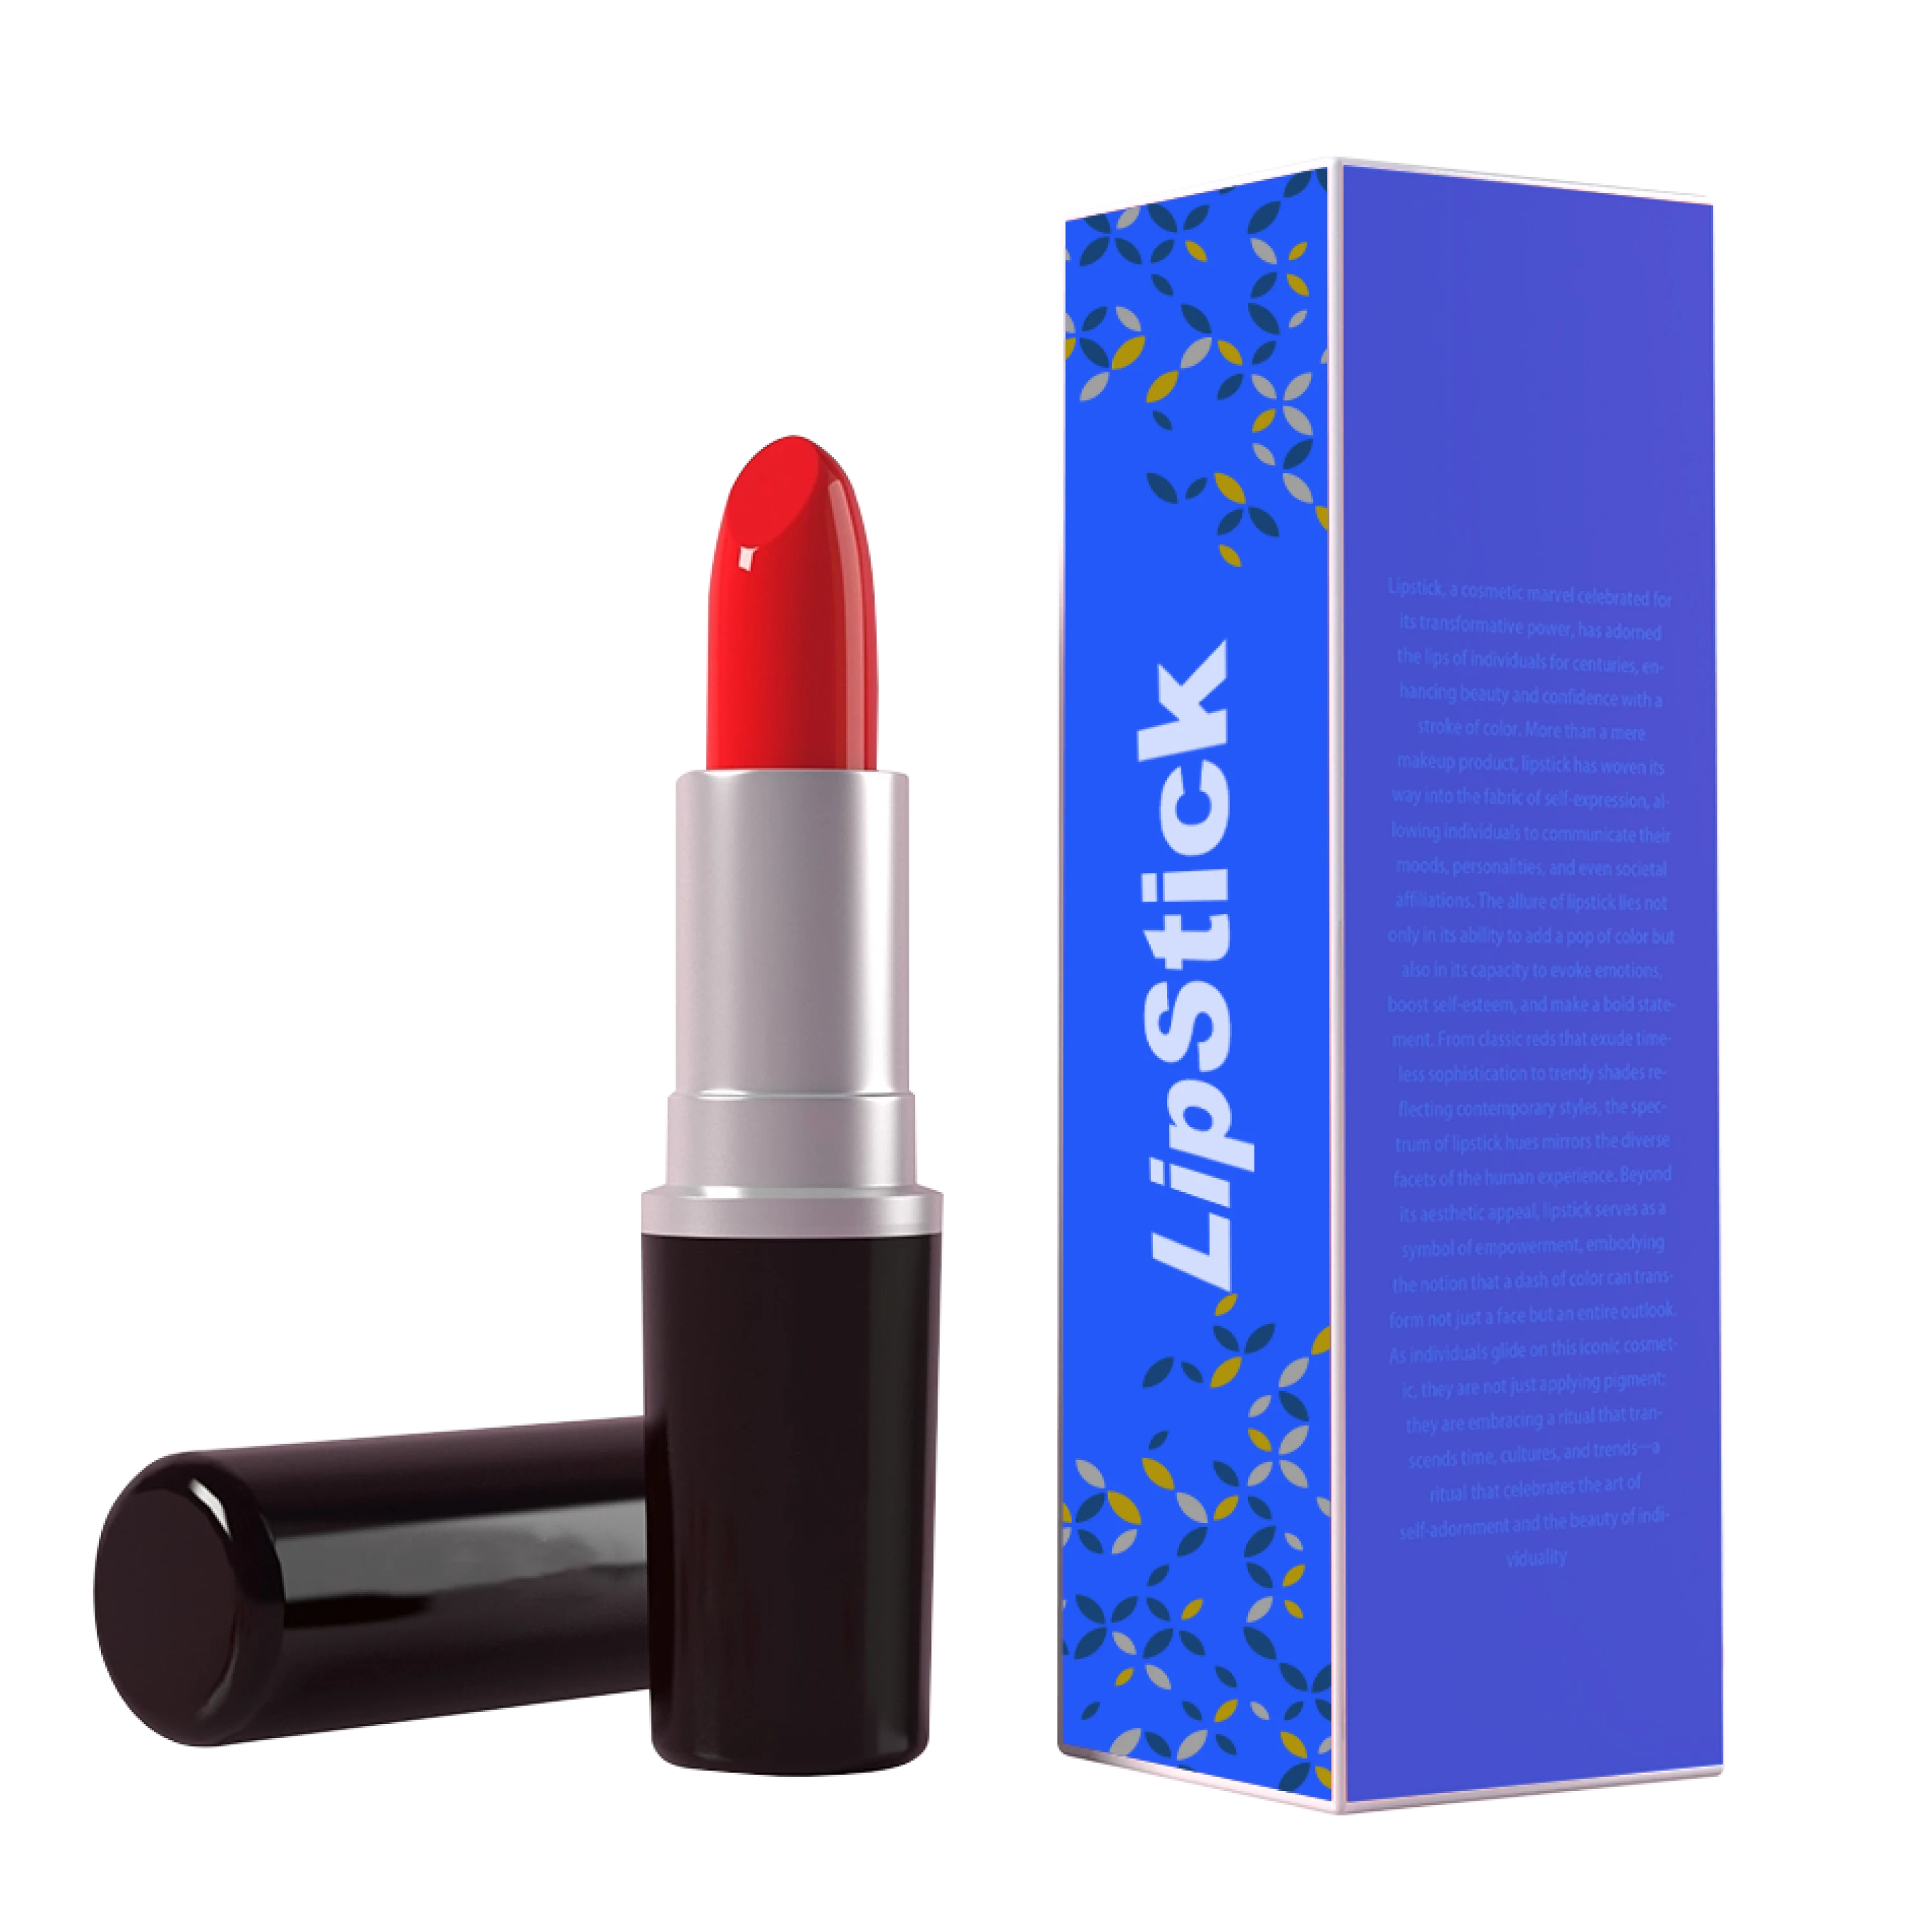 Carousel Custom lipstick Boxes image 3 | The Box Lane